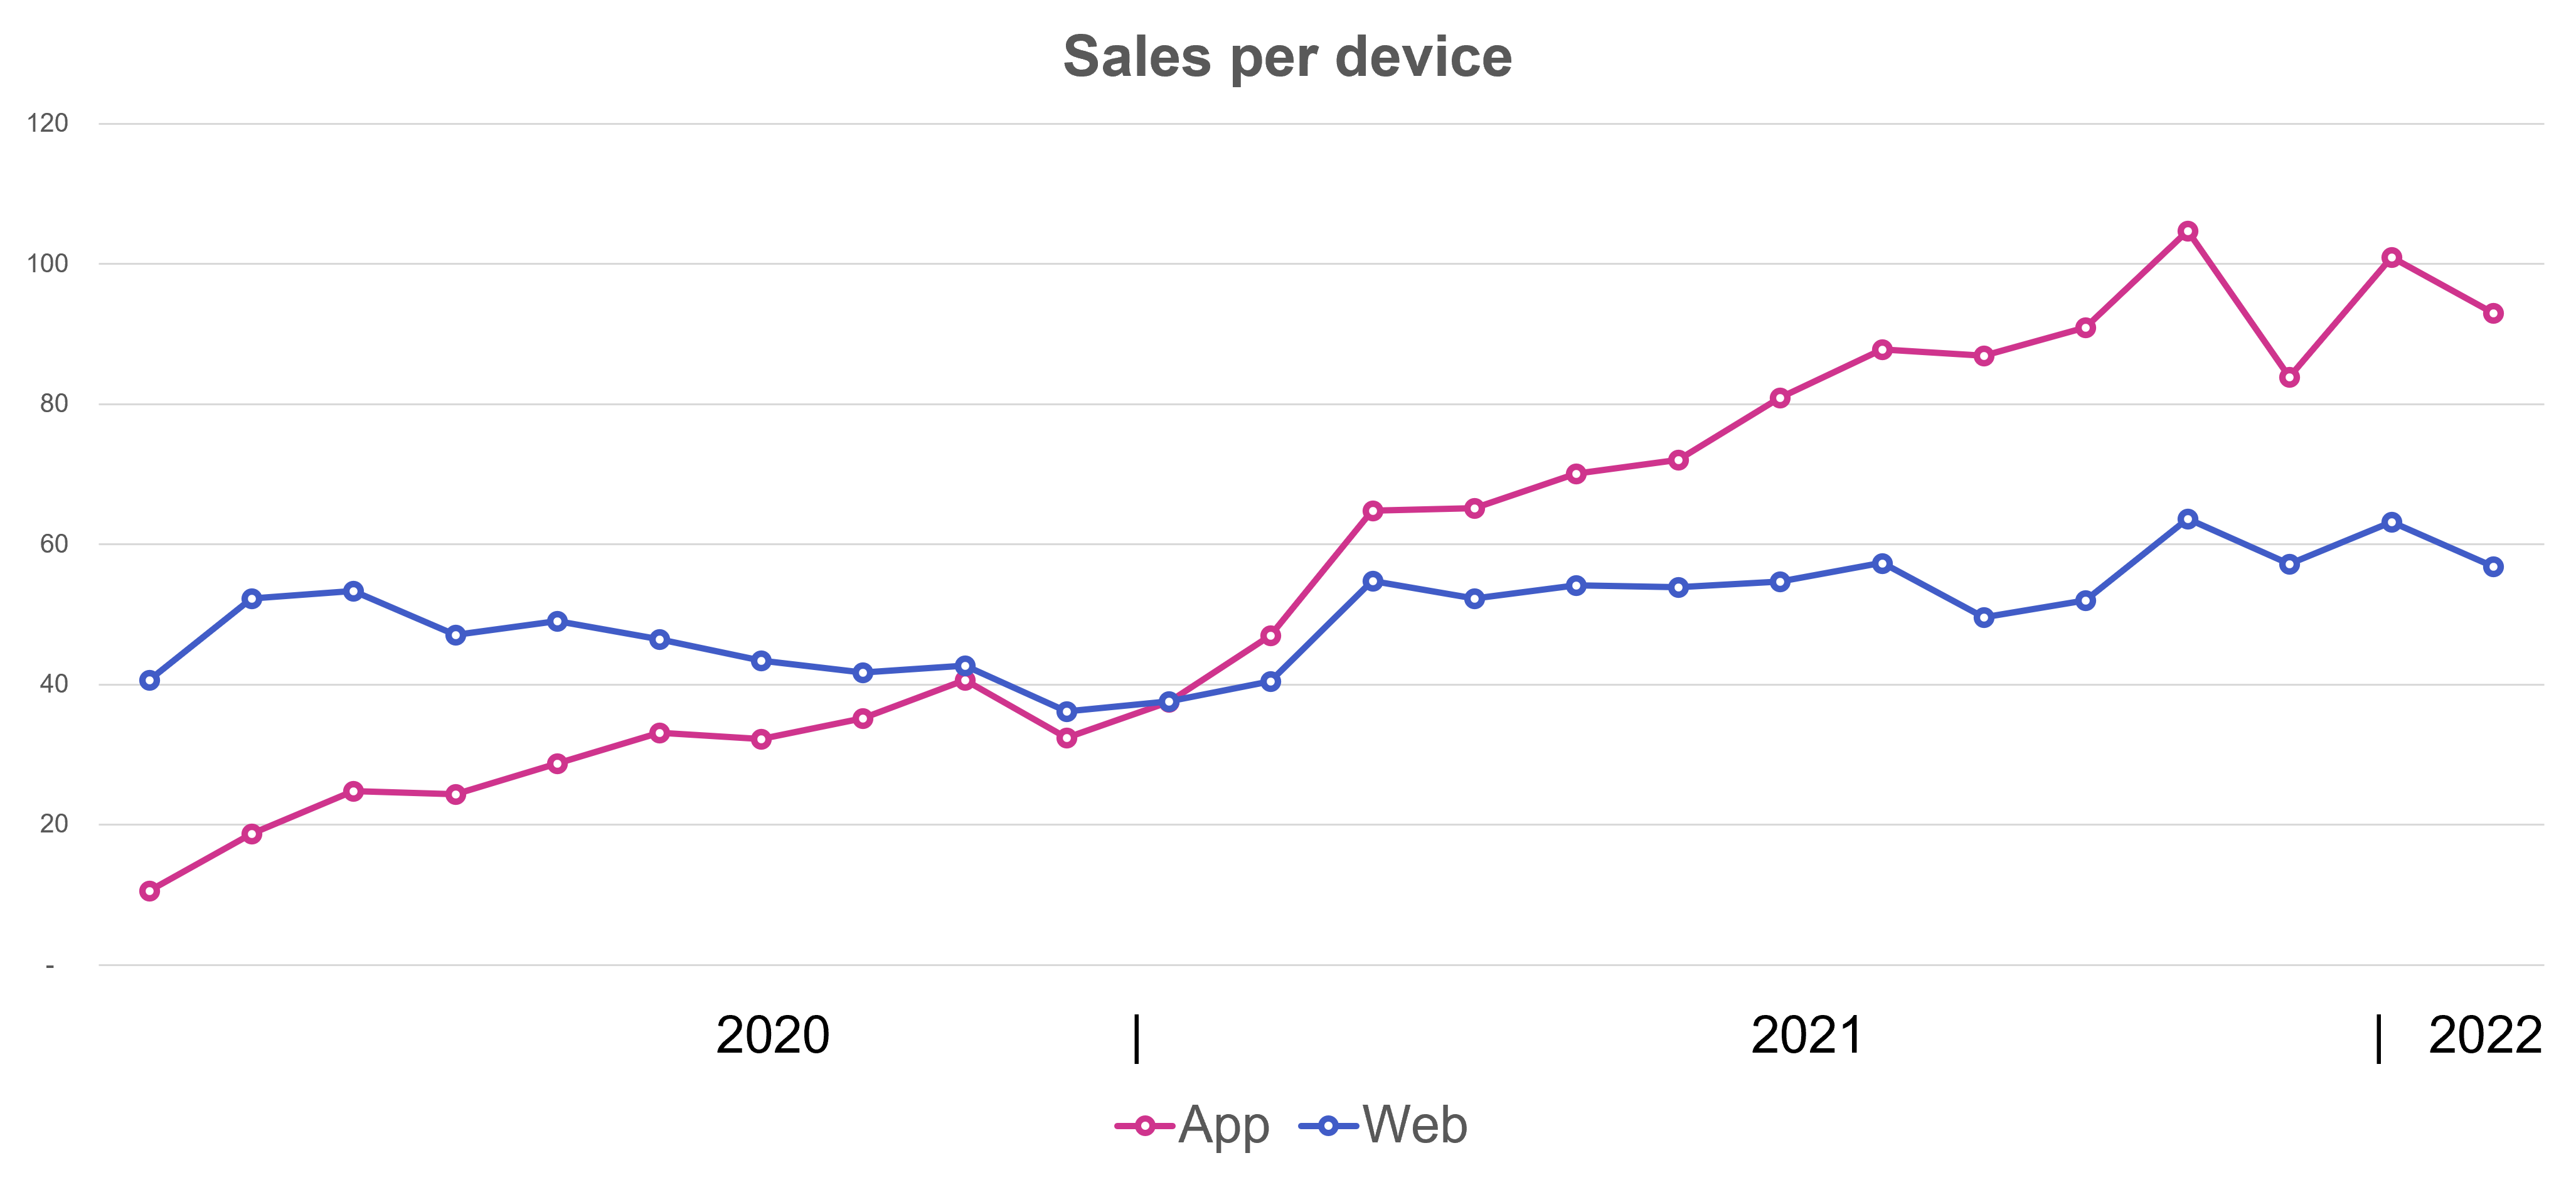 Digital Sales per device YOY